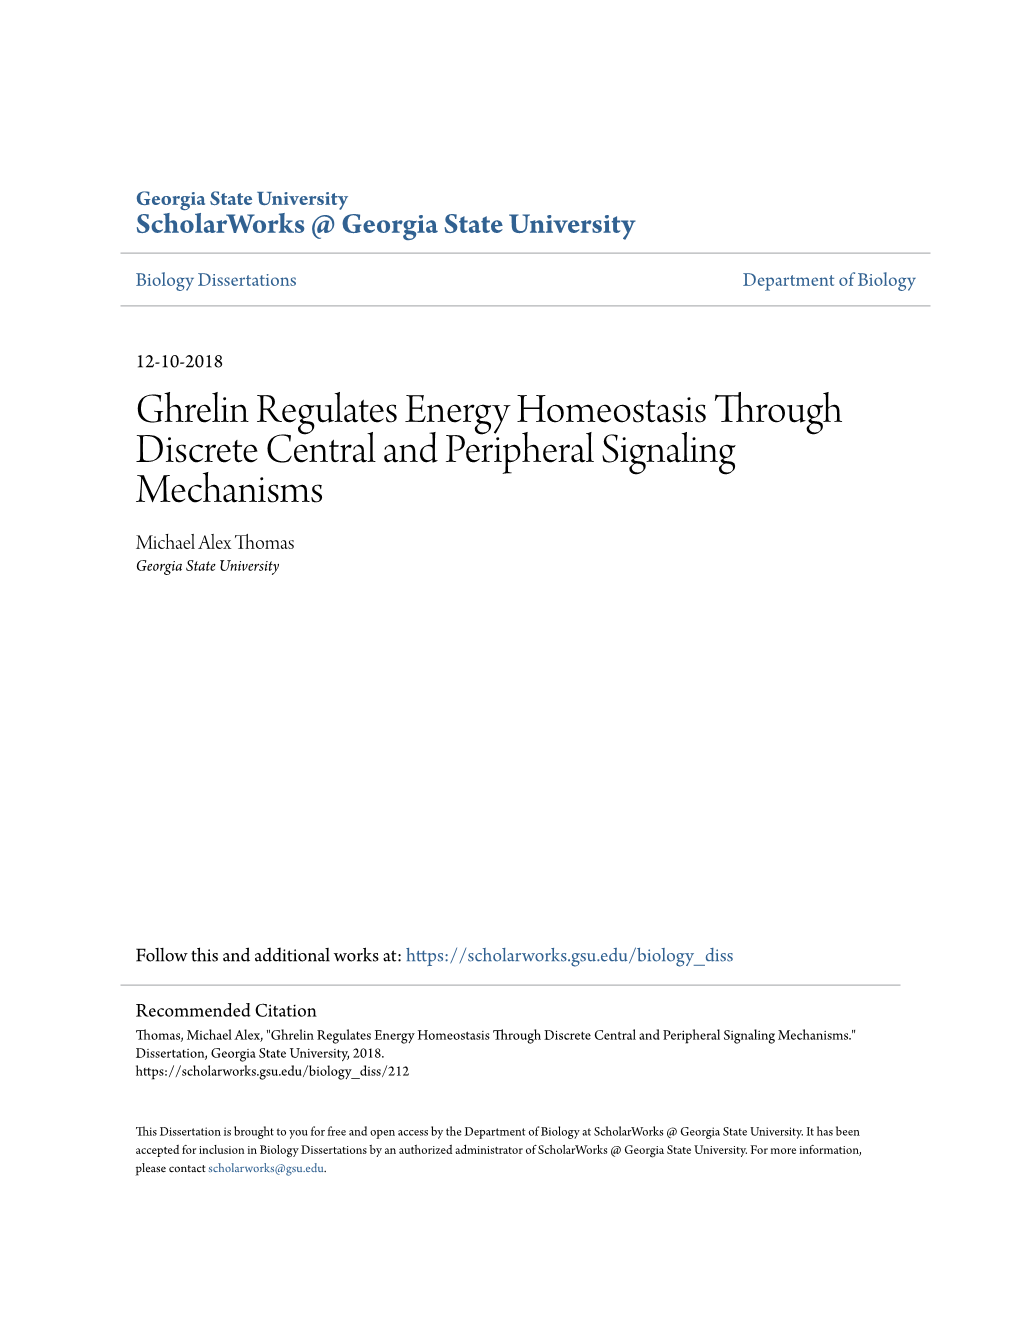 Ghrelin Regulates Energy Homeostasis Through Discrete Central and Peripheral Signaling Mechanisms Michael Alex Thomas Georgia State University